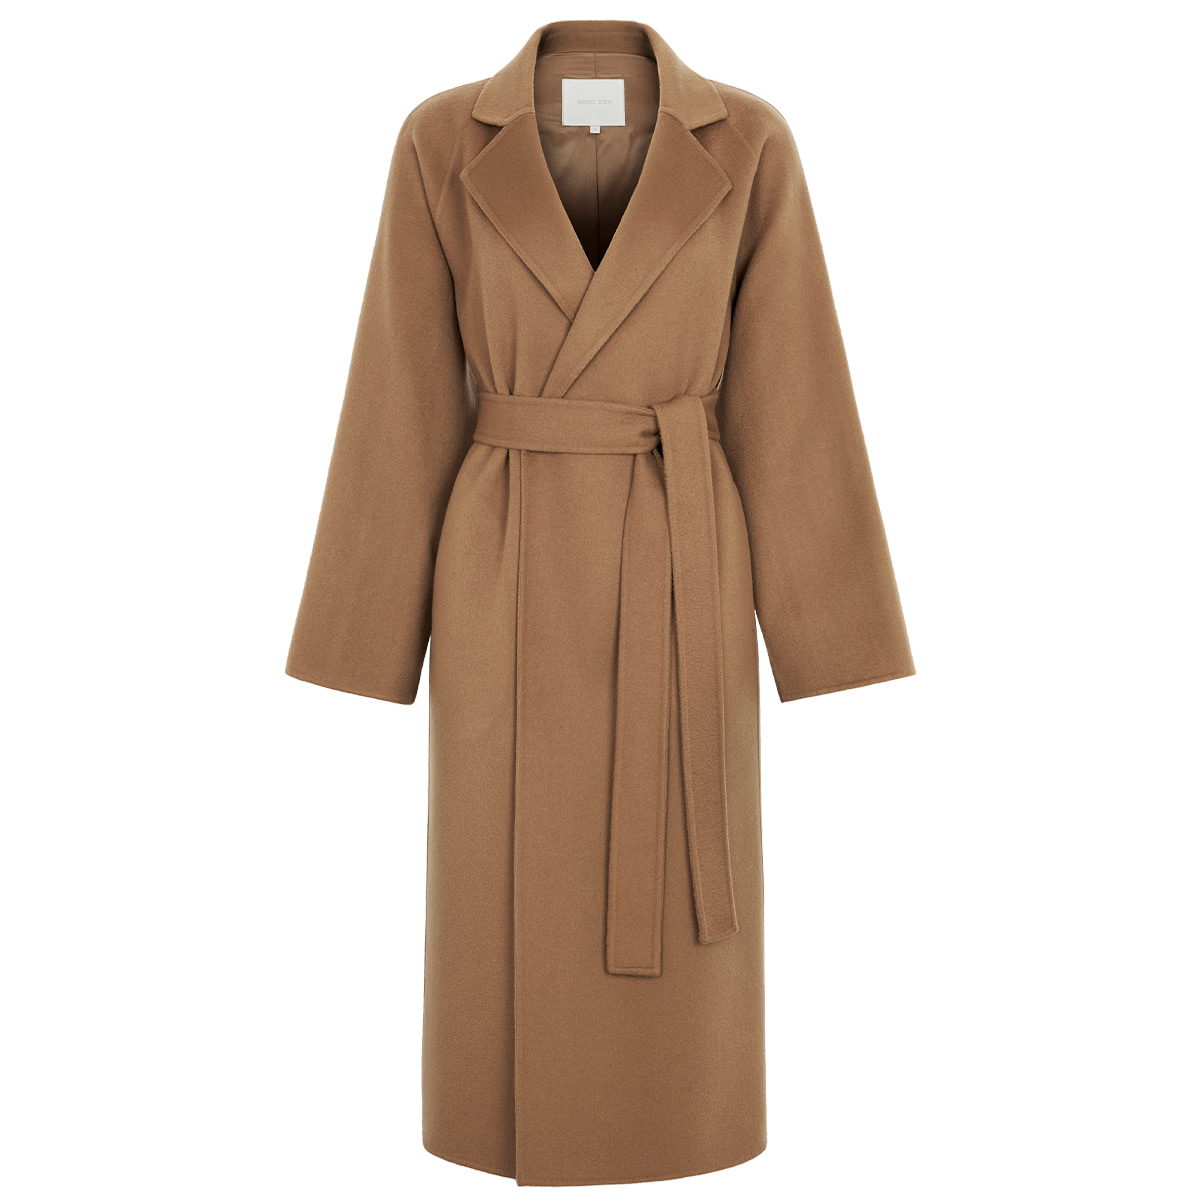 Marais coat (camel)